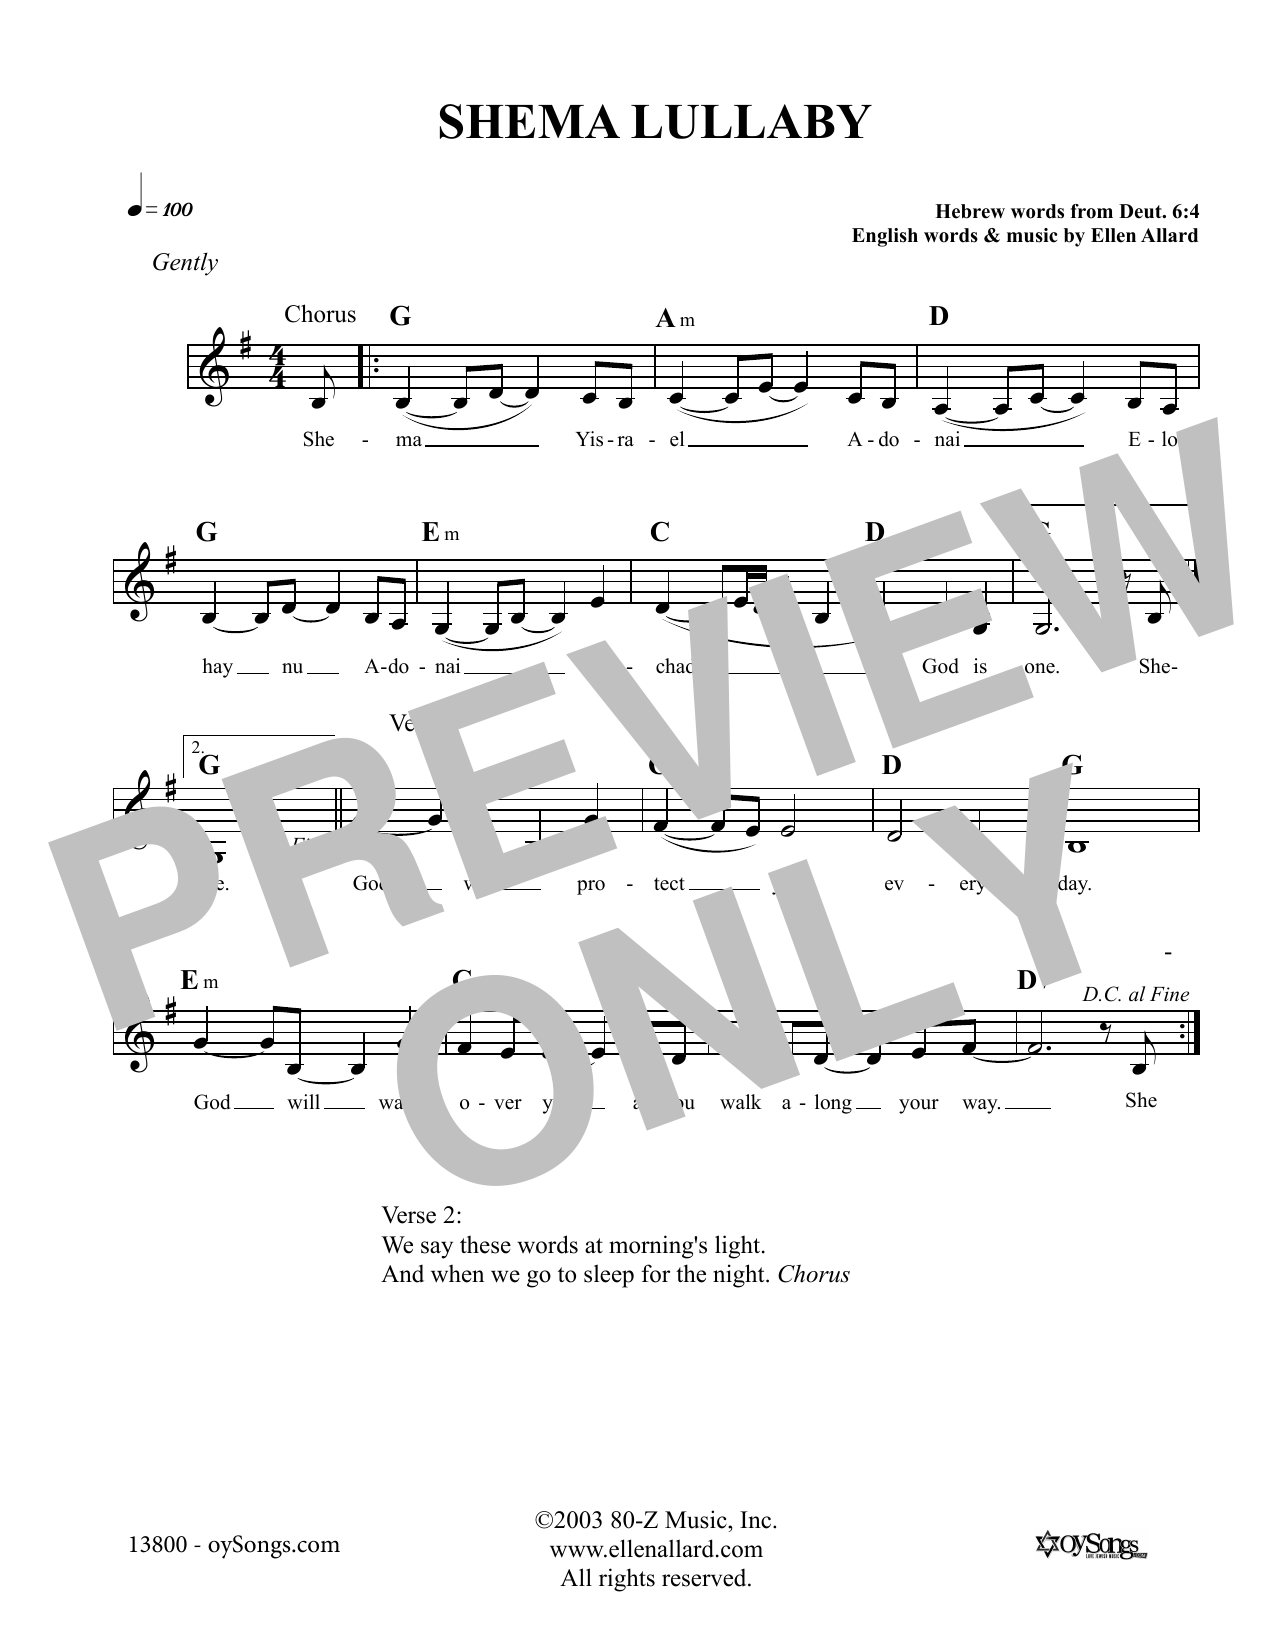 Ellen Allard Shema Lullaby Sheet Music Notes & Chords for Melody Line, Lyrics & Chords - Download or Print PDF